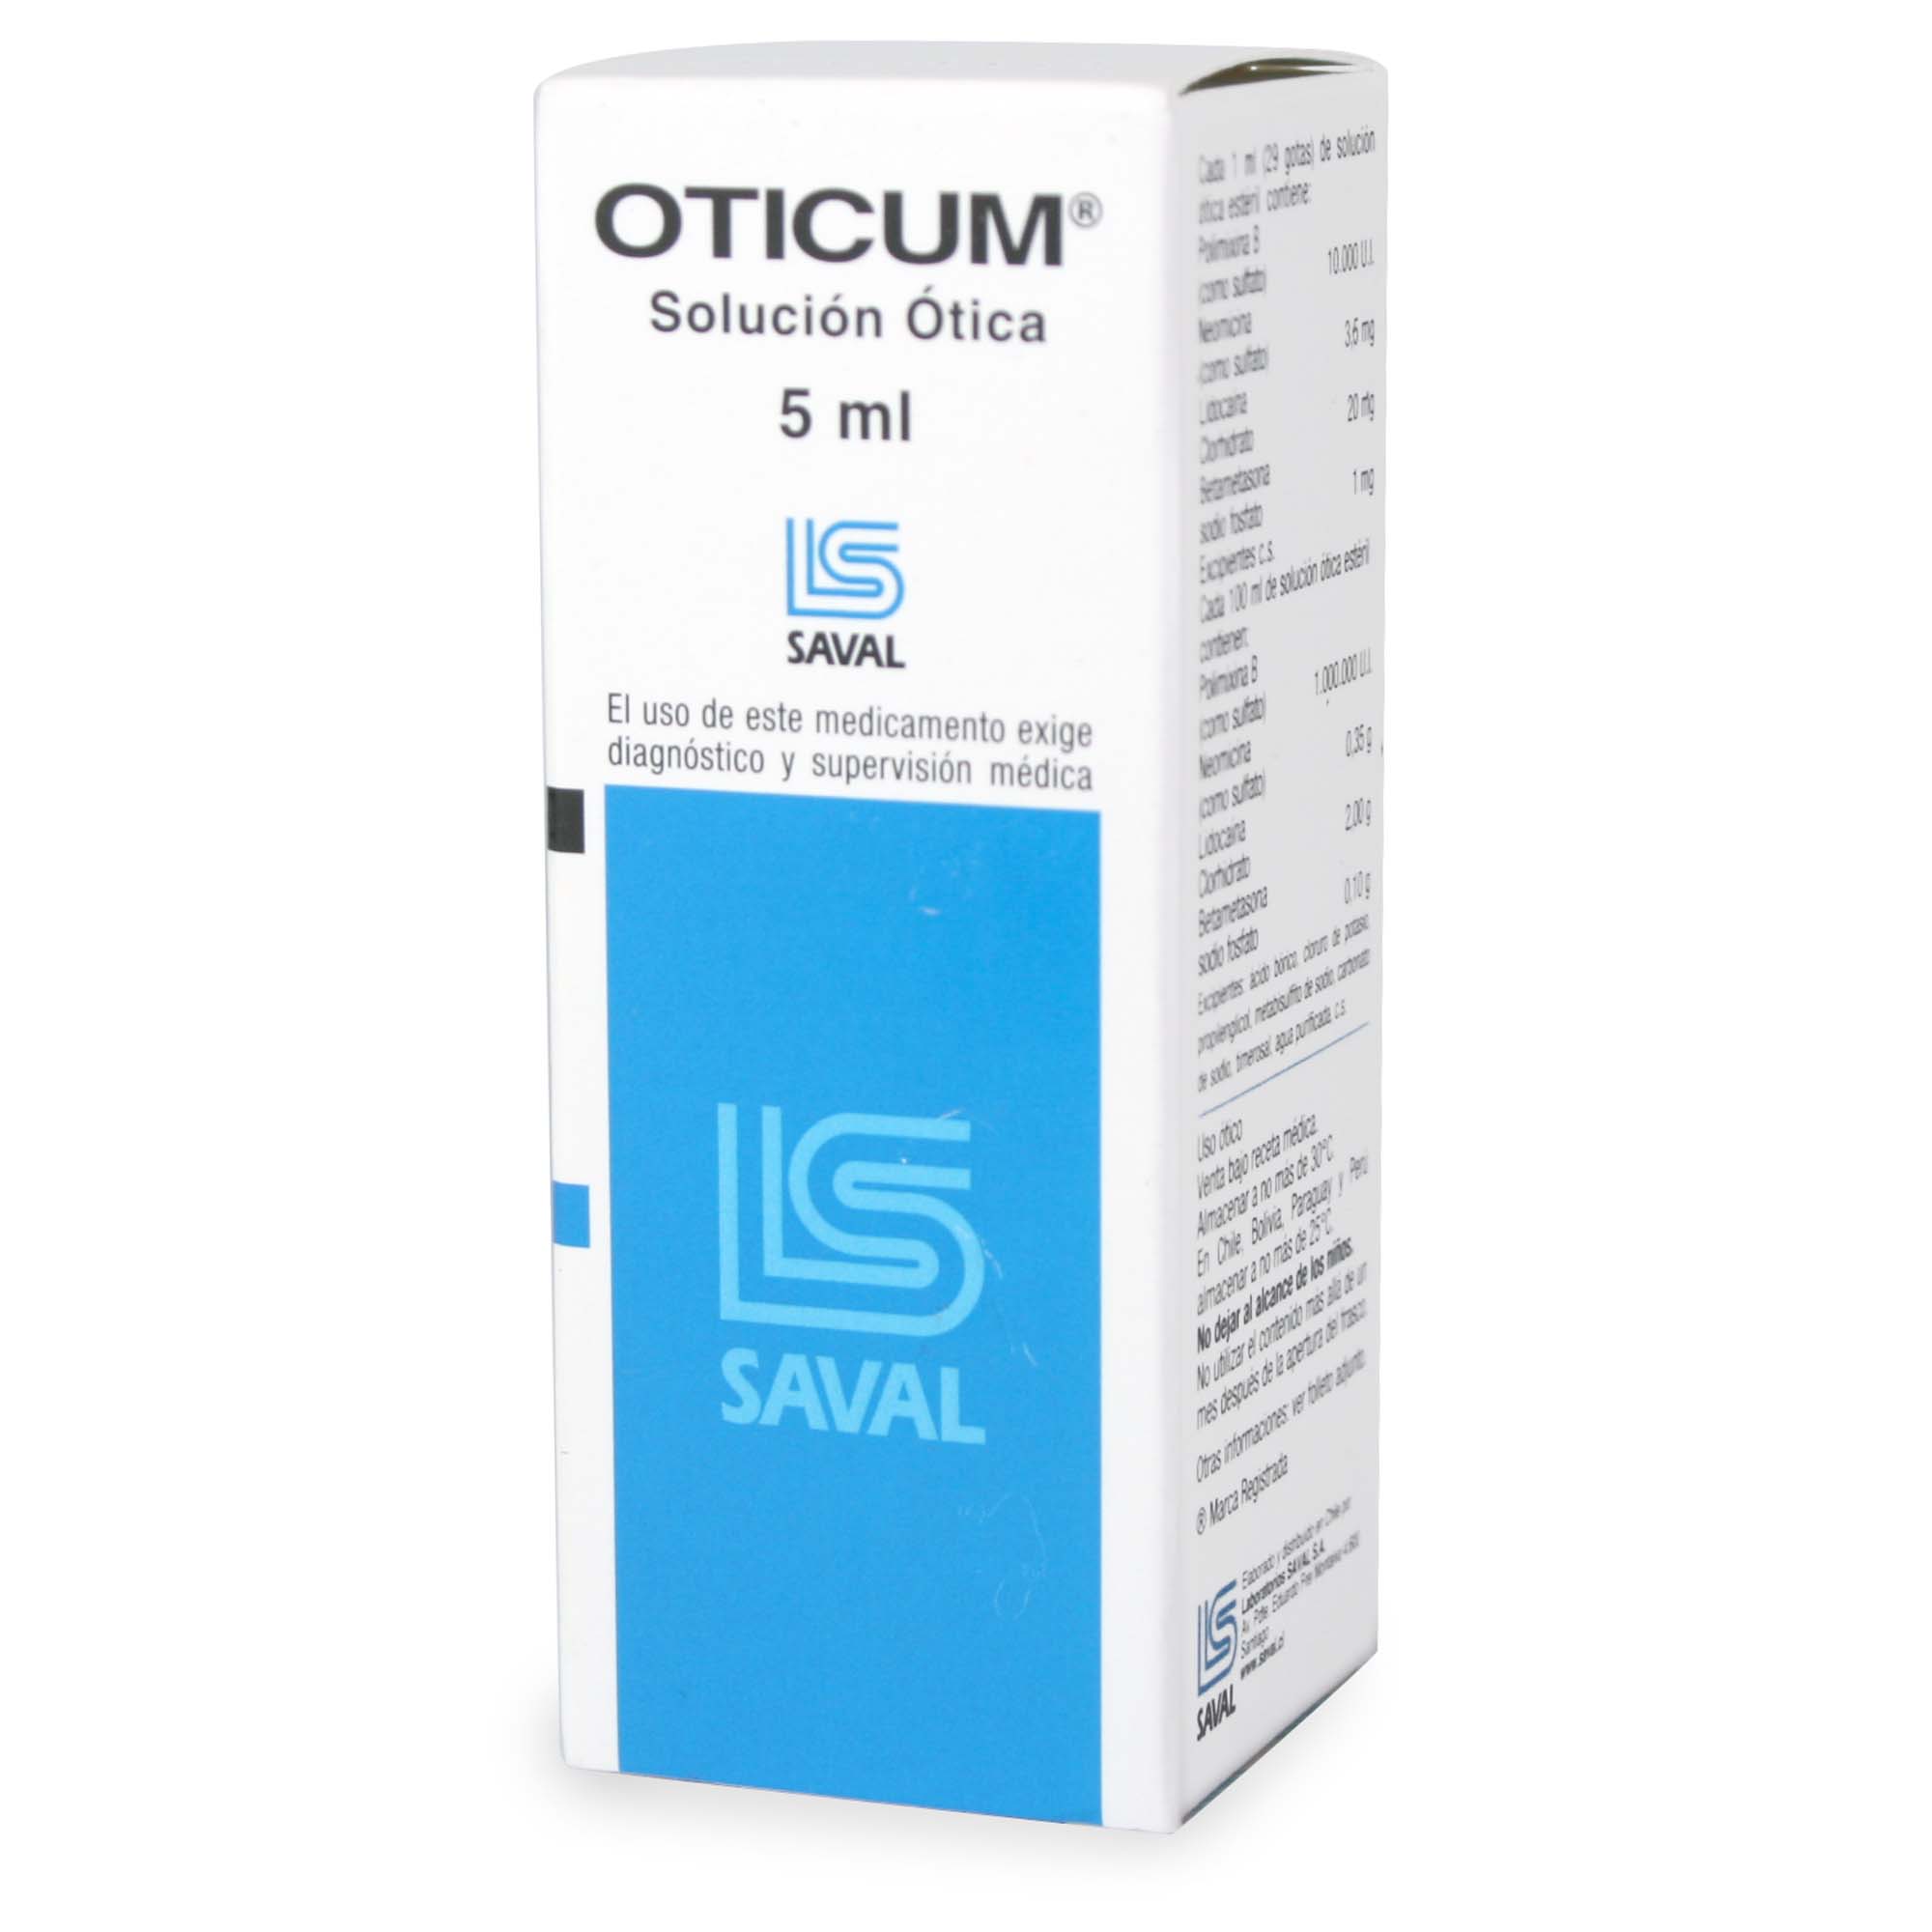 Oticum Solución Otológica 5 mL | Farmacias Cruz Verde